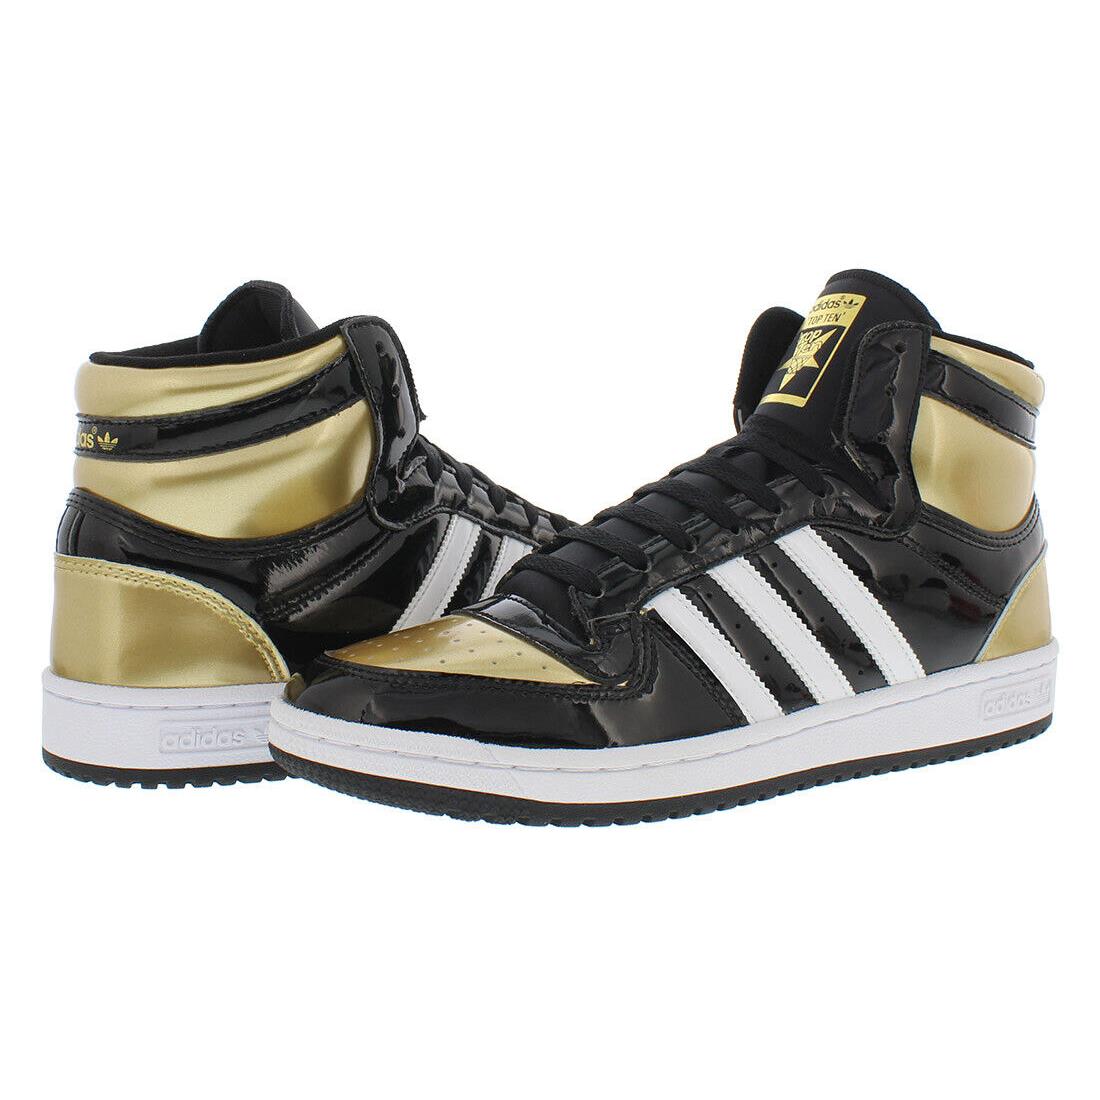 Adidas Top Ten Rb Mens Shoes - Black/Gold/White, Main: Black